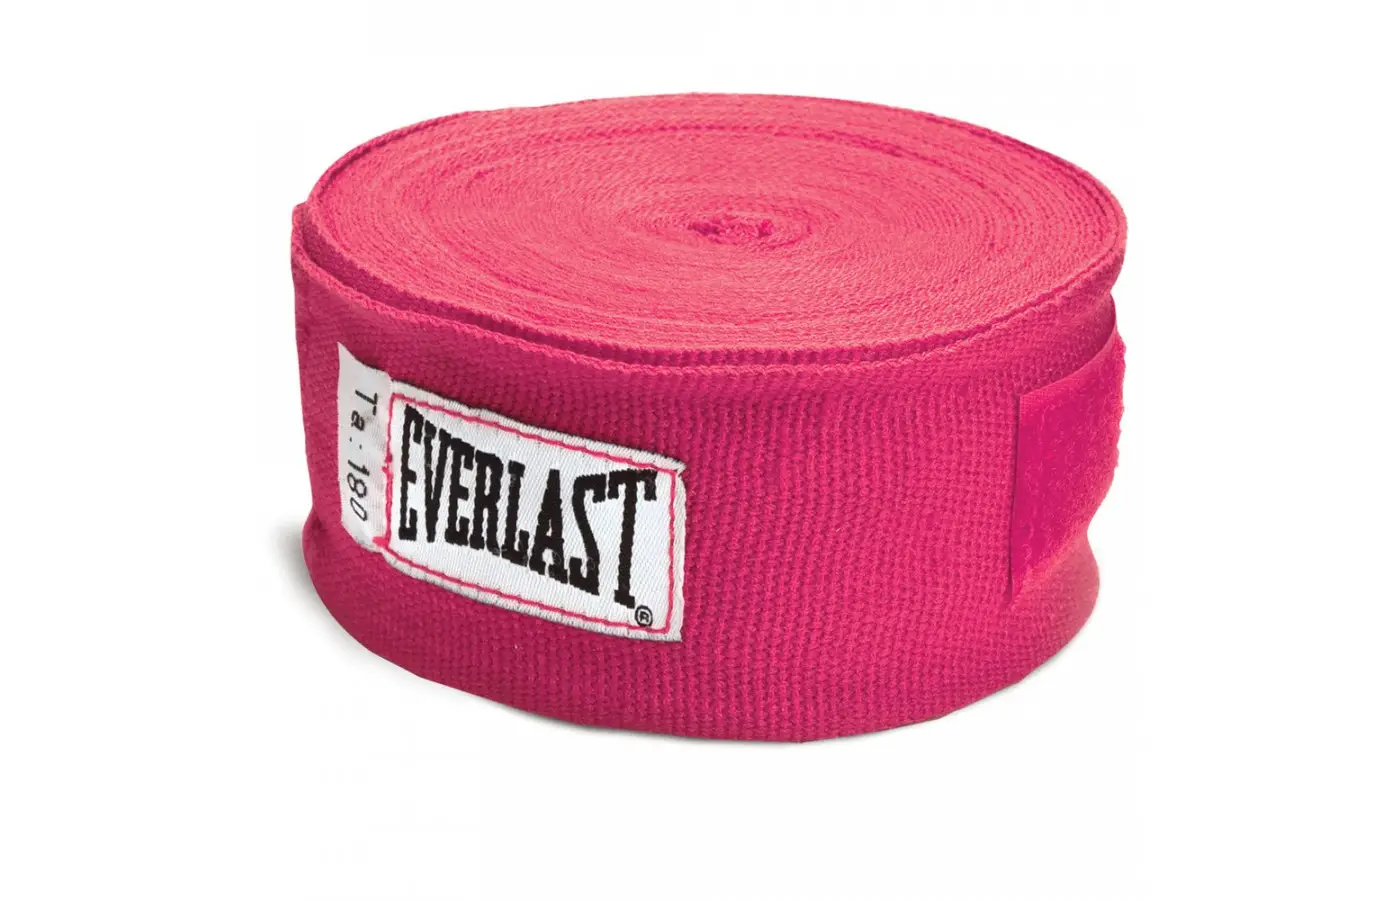 Everlast wraps pink